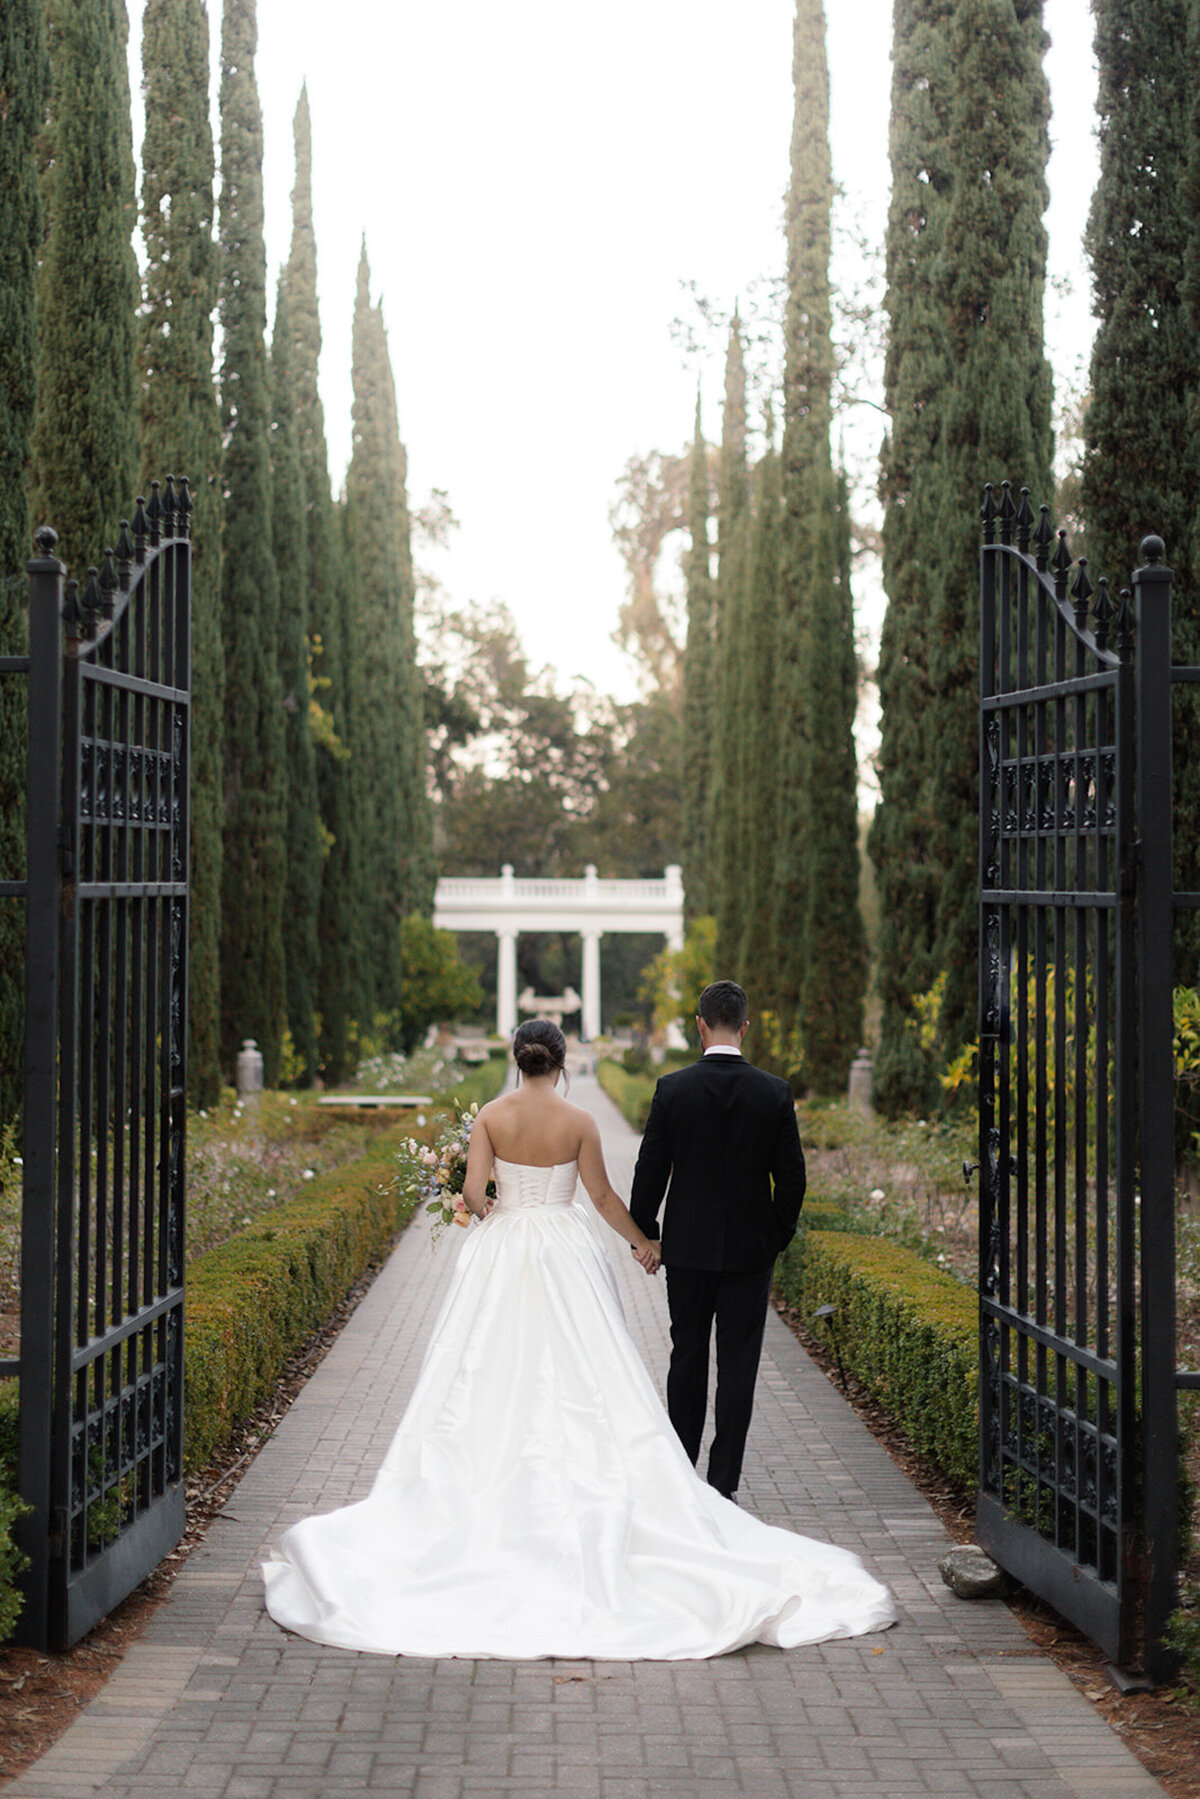 Bride and groom walking through iron gates